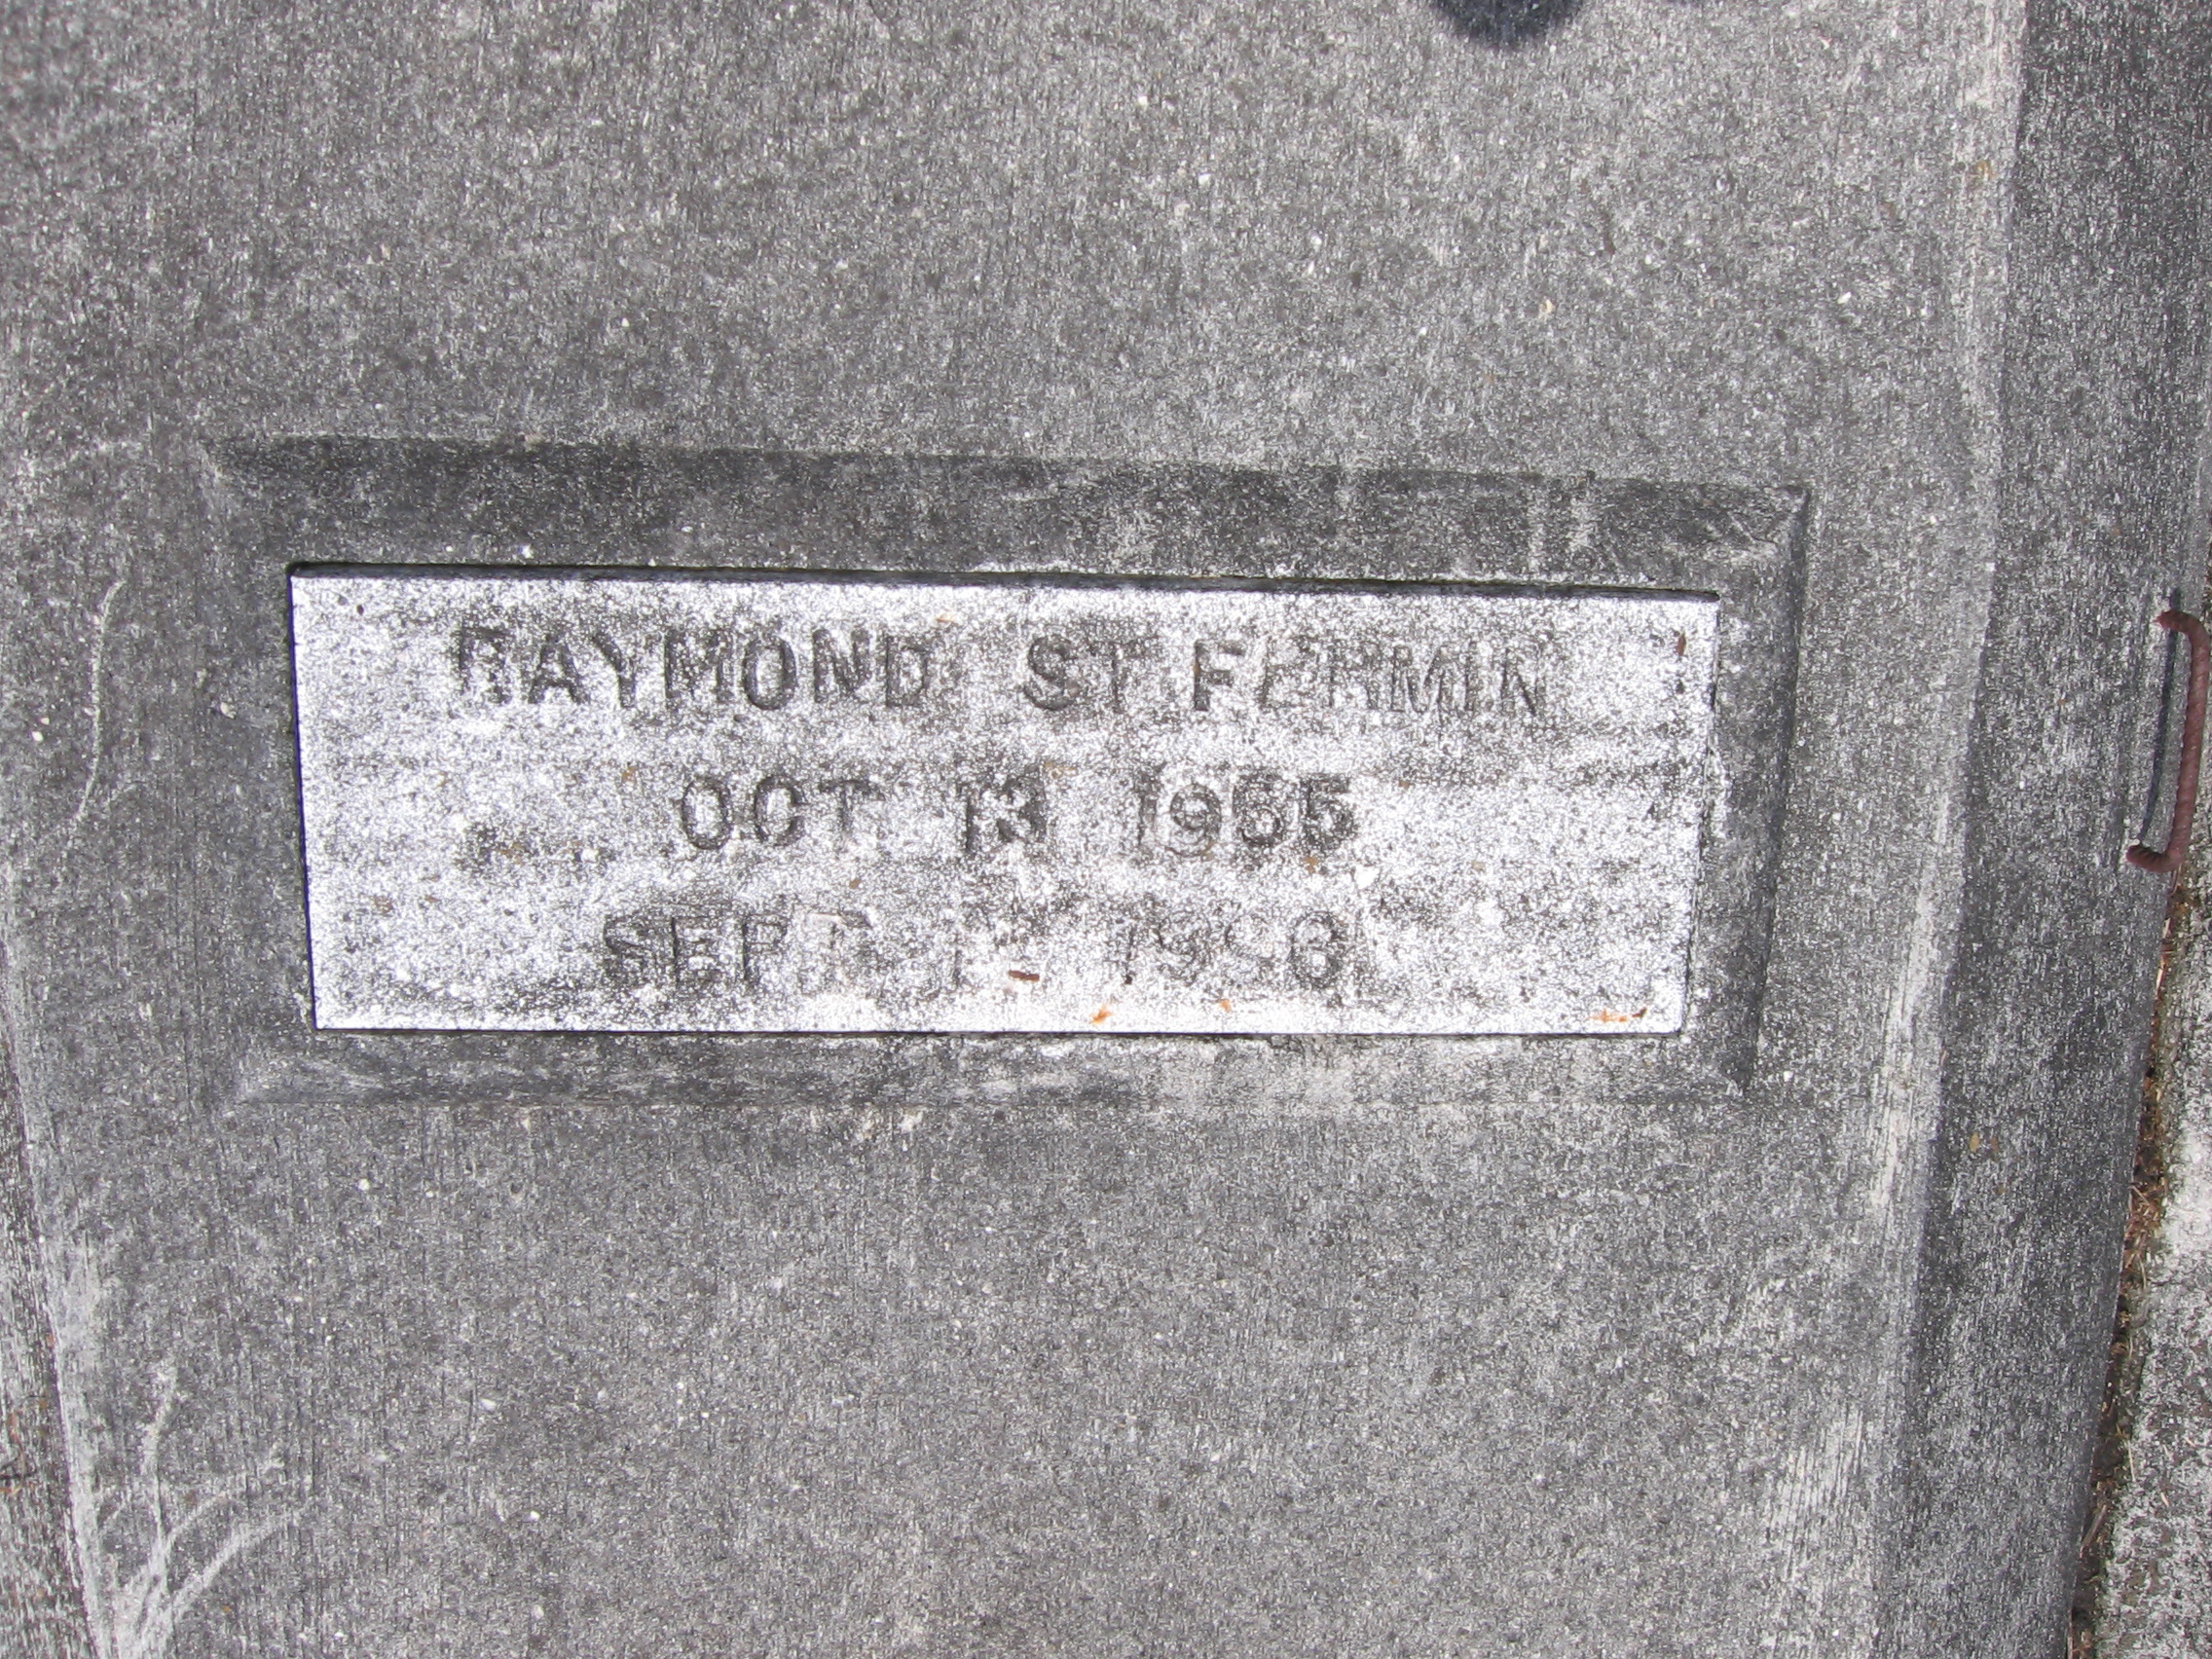 Raymond St Fermin